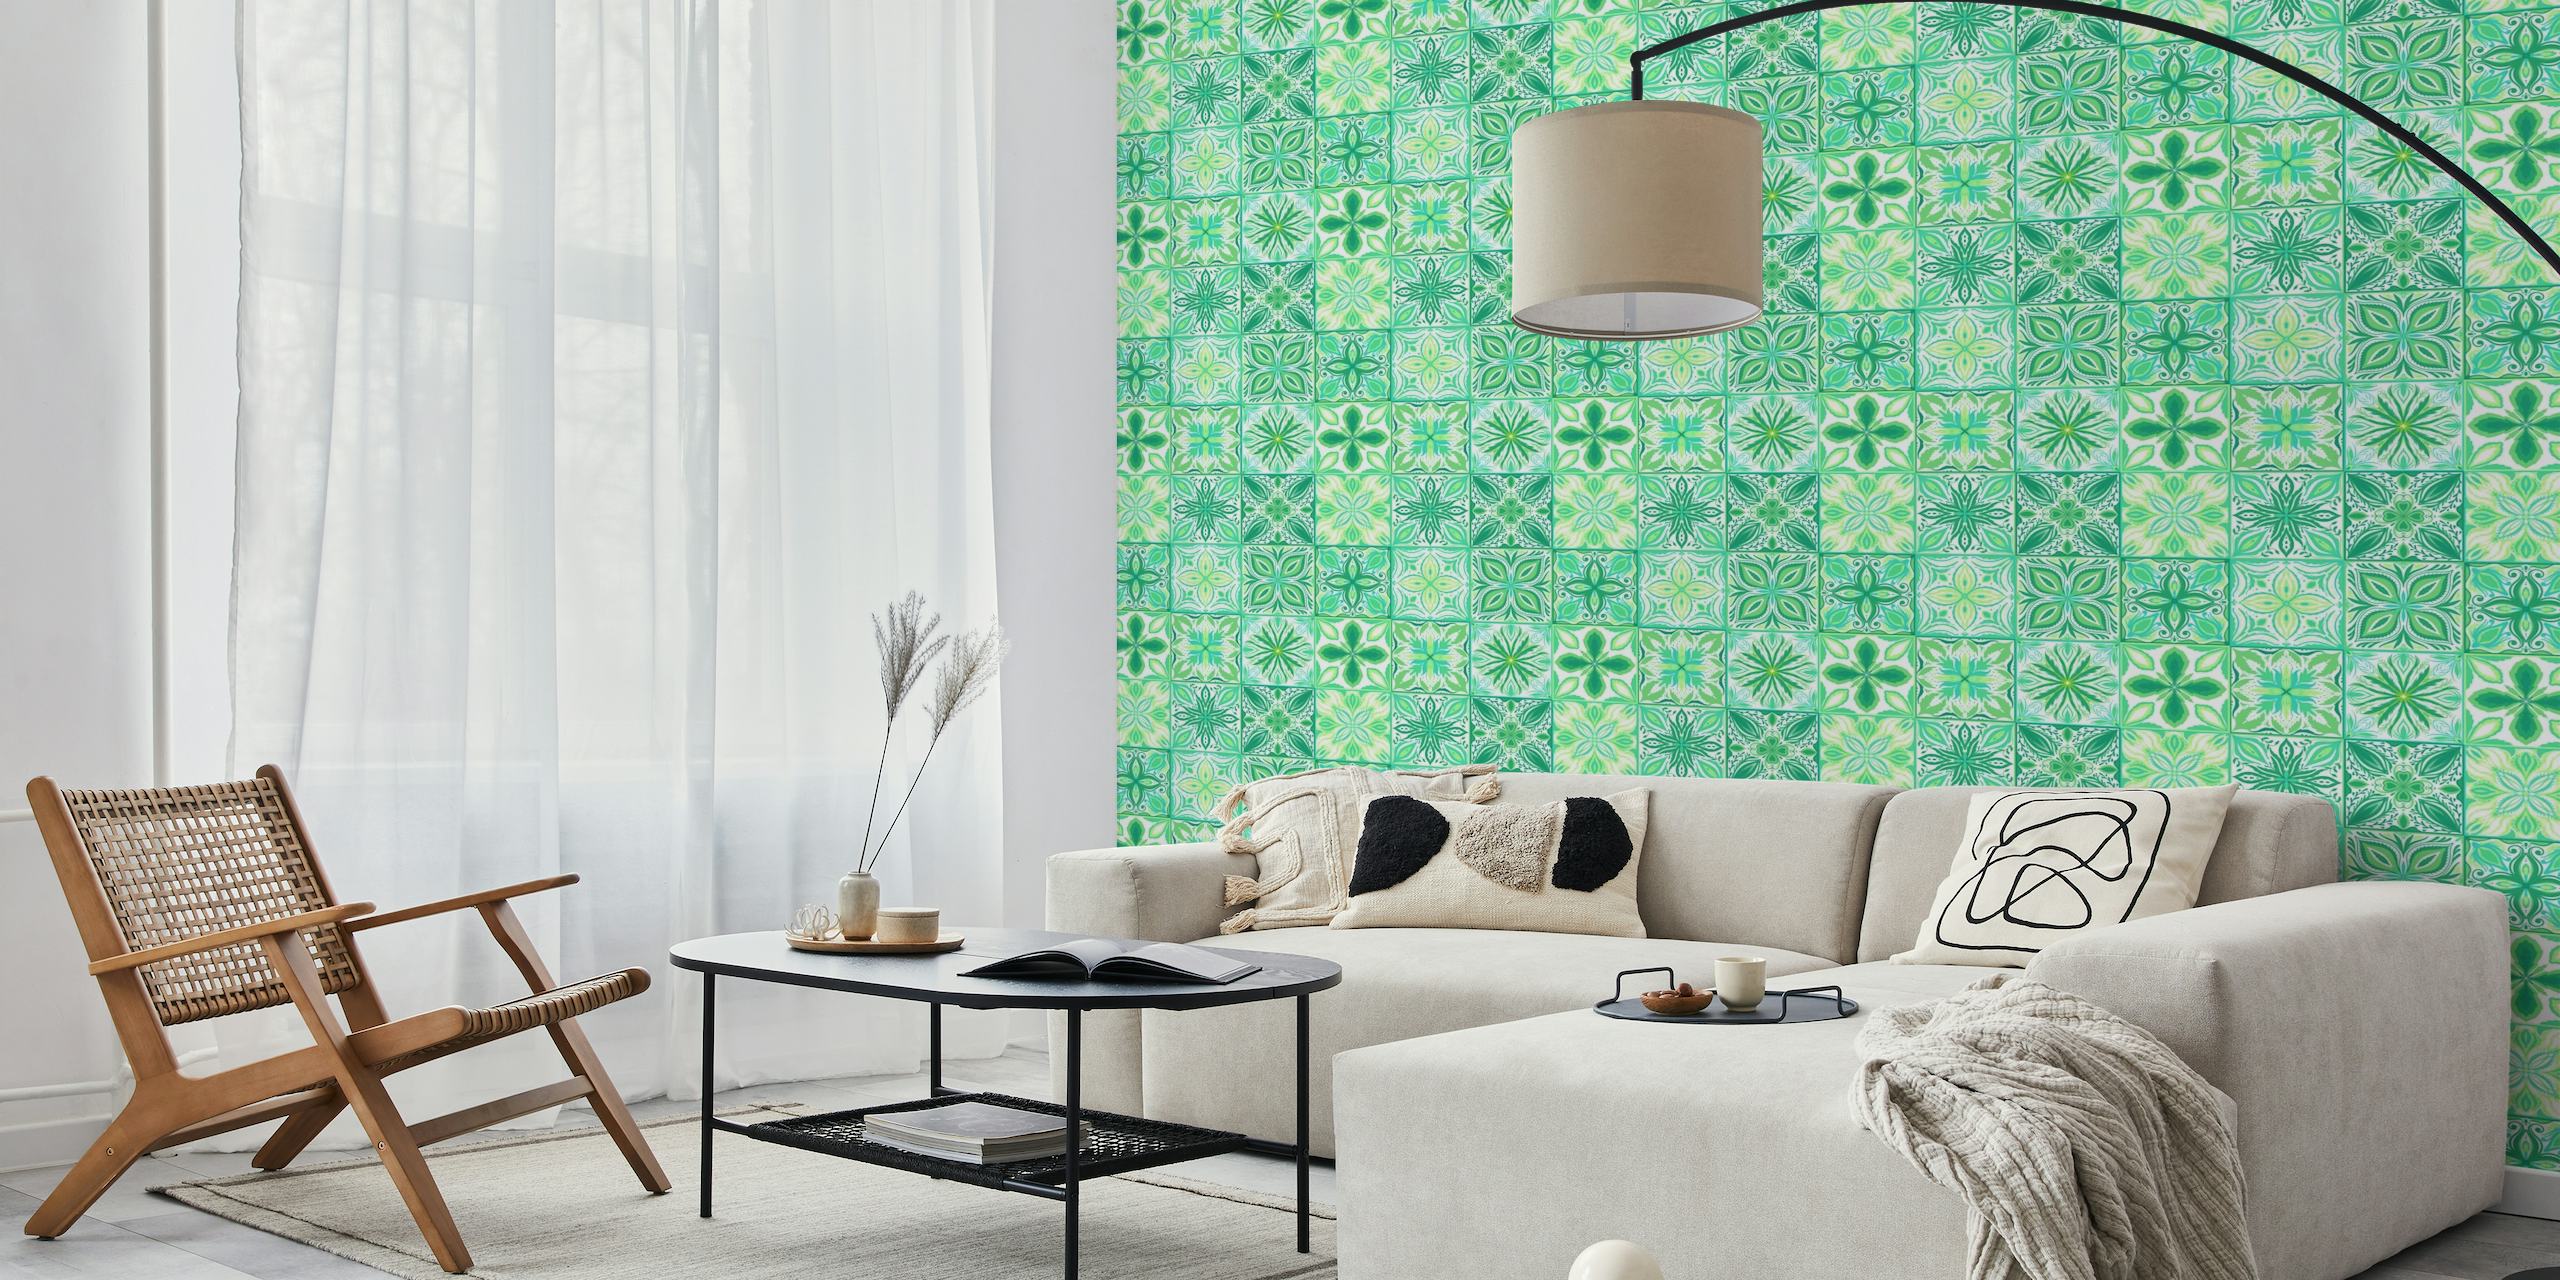 Ornate tiles in green and white wallpaper